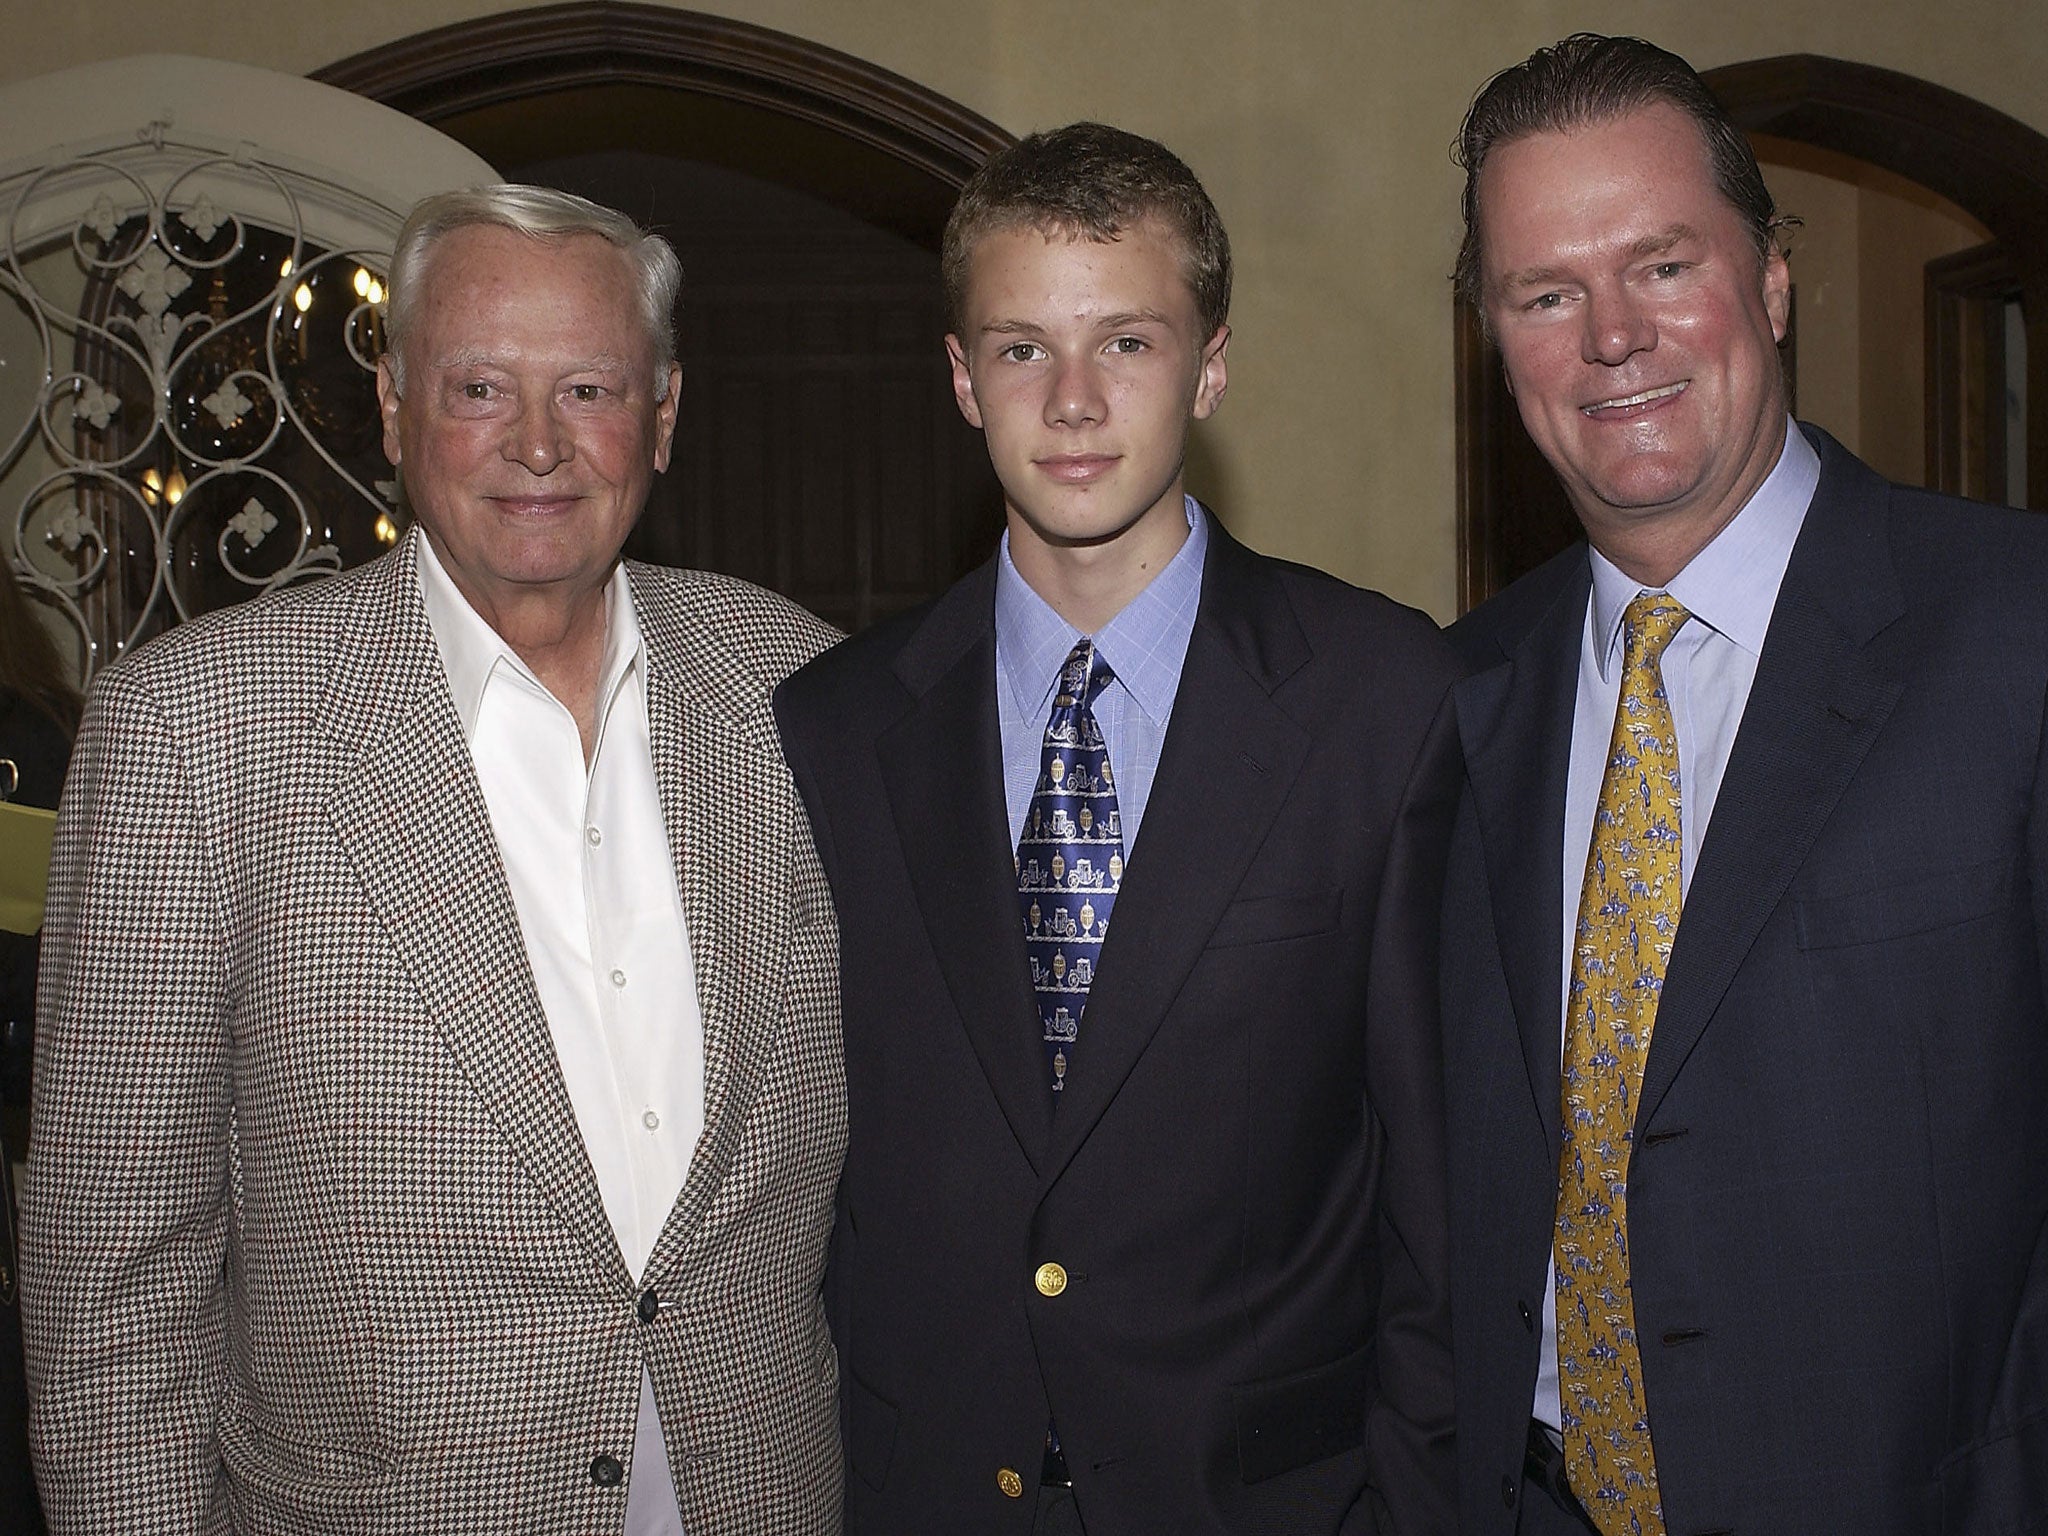 Hotelier Rick Hilton, his son Barron and father Barron (on the left)